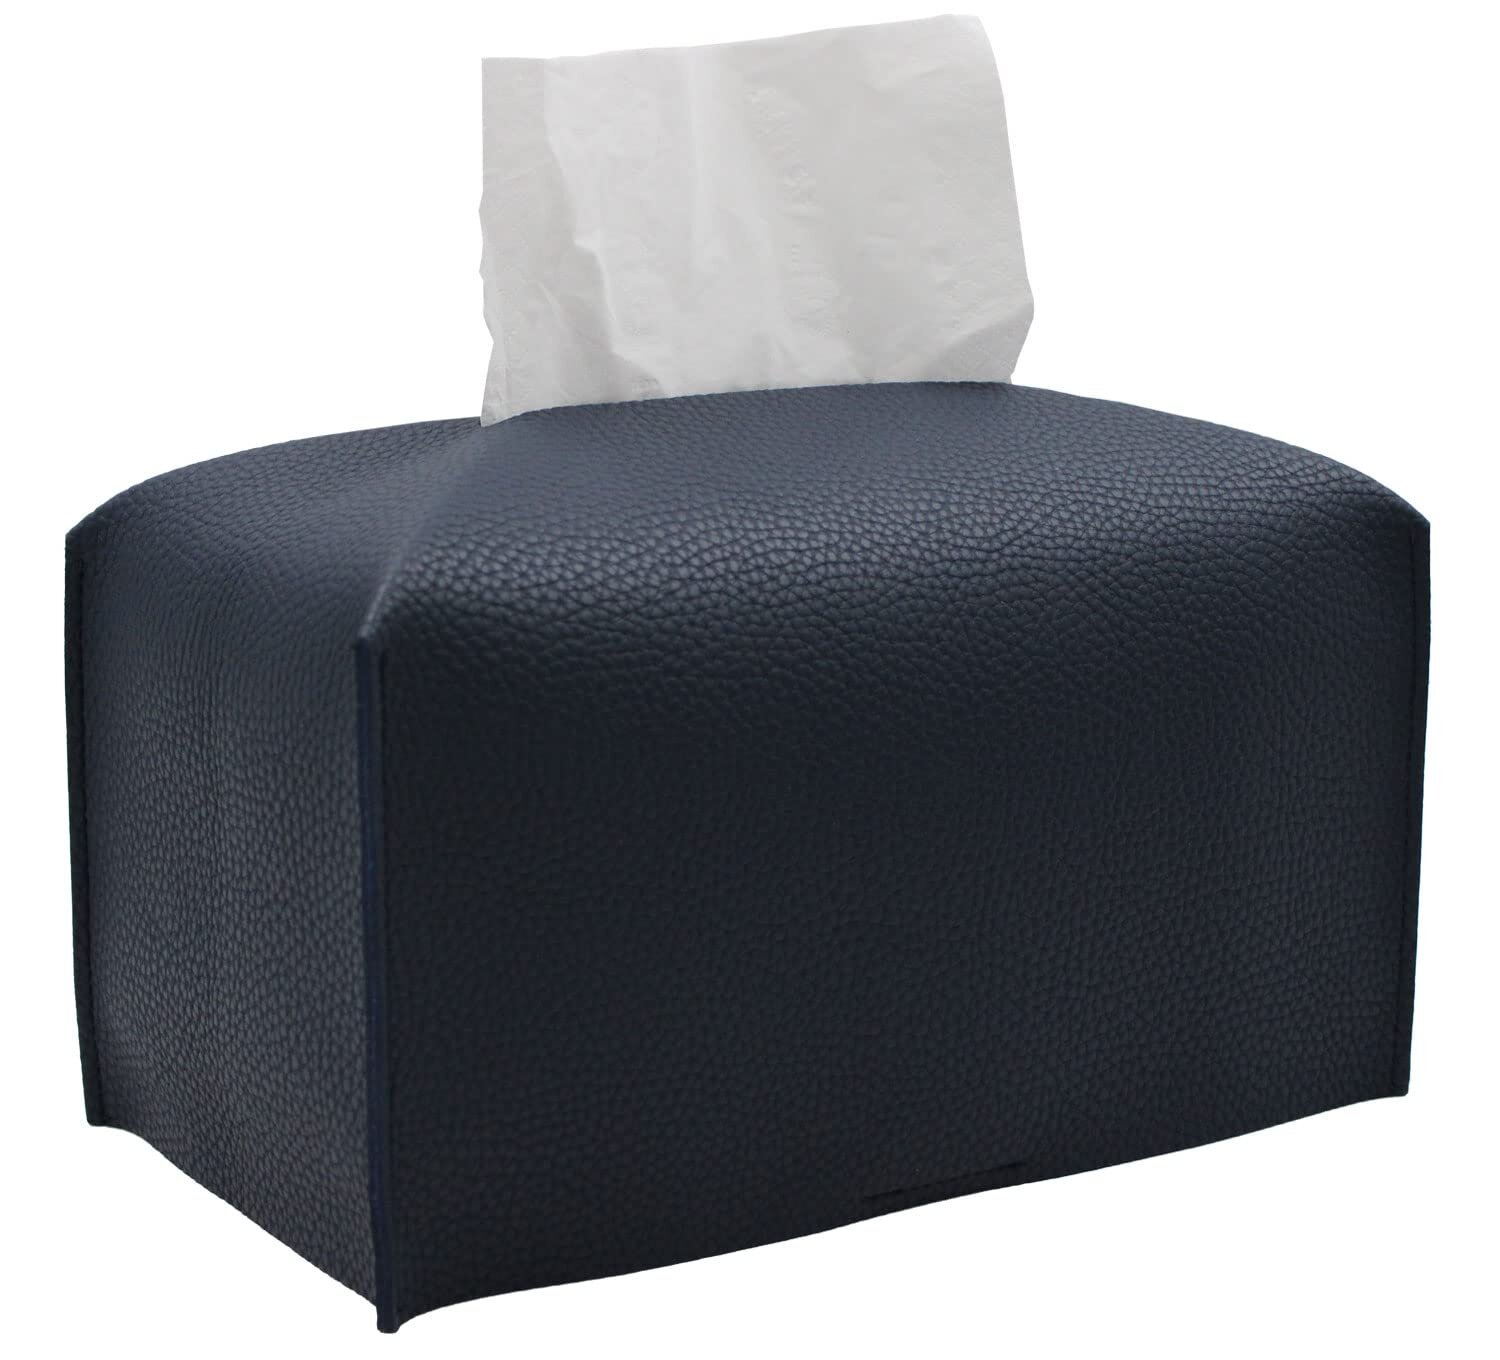 PU Leather Tissue Box Cover Pump Paper Hotel Car Office Napkin Holder Case T 